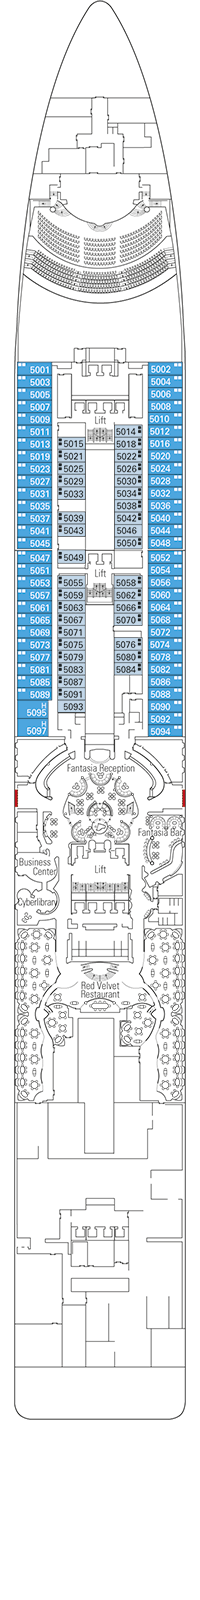 Fantasia Deck Plan